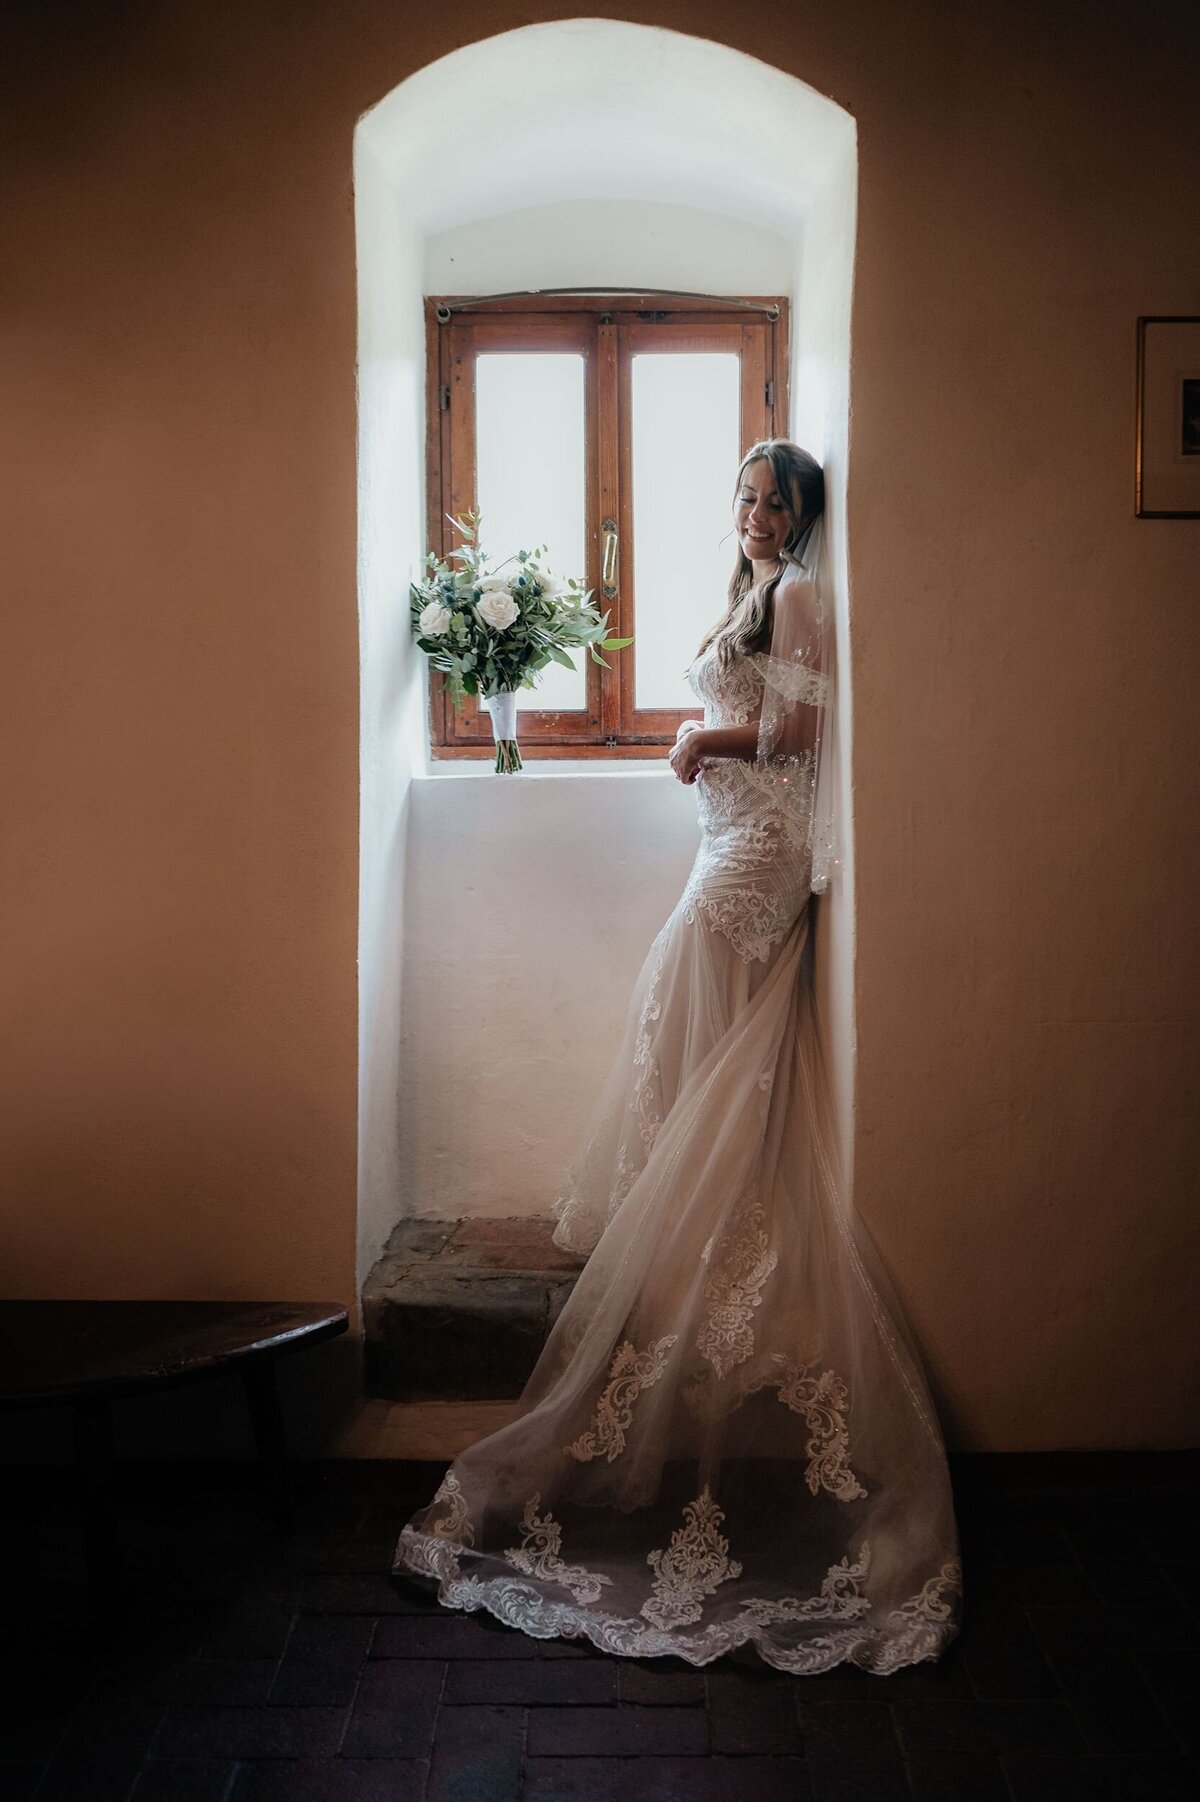 Pete-and-Brenna-Tuscany-Italy-Destination-Wedding-76